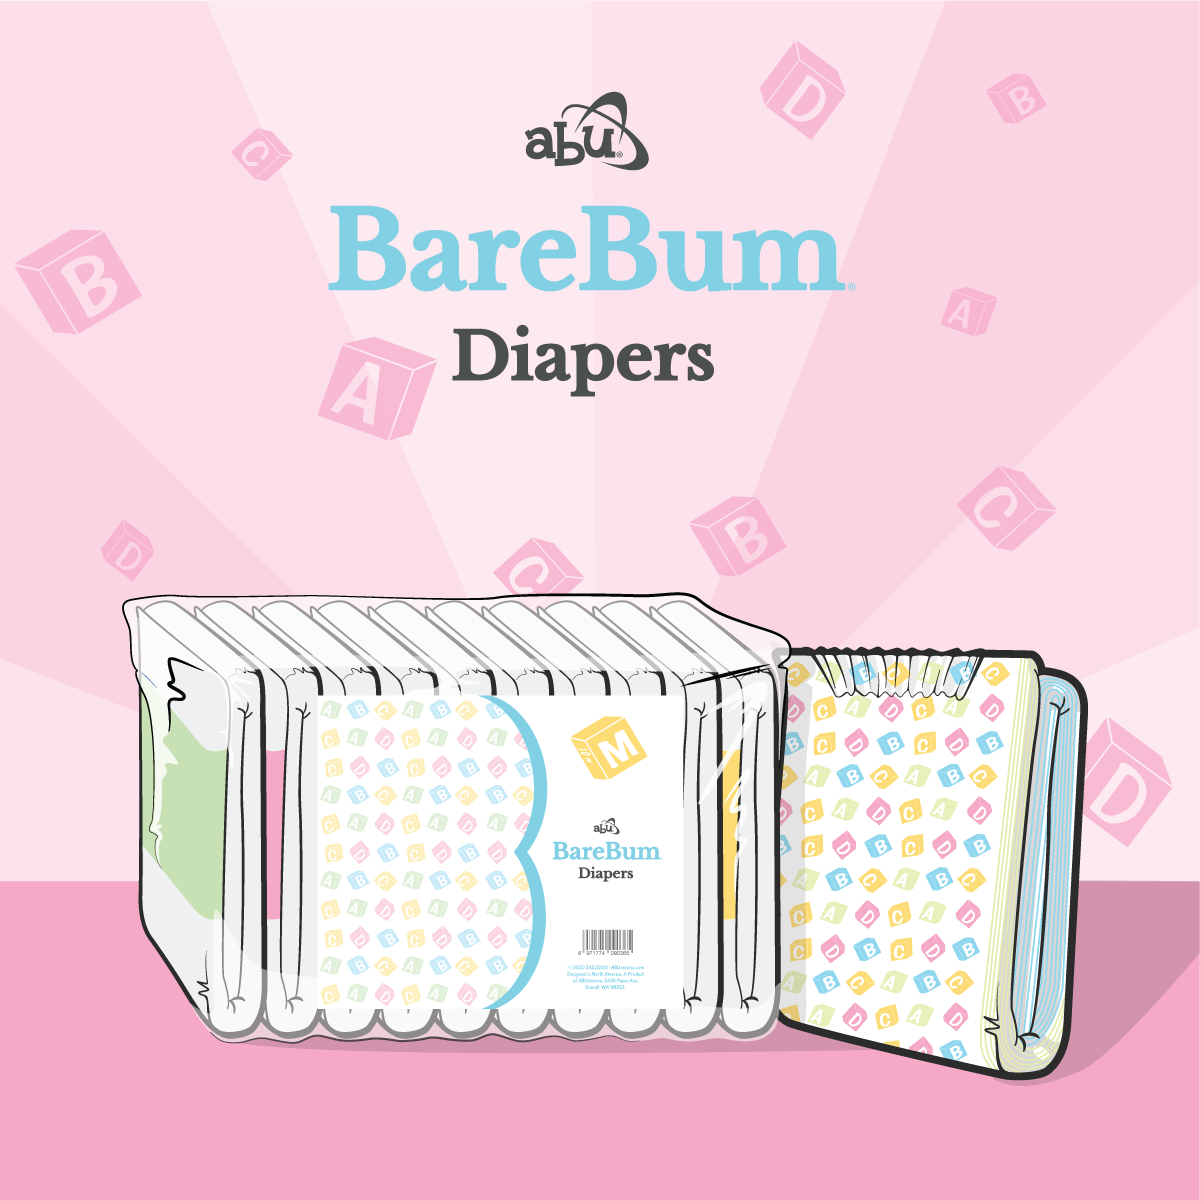 BareBum® Diapers - ABUniverse Europe